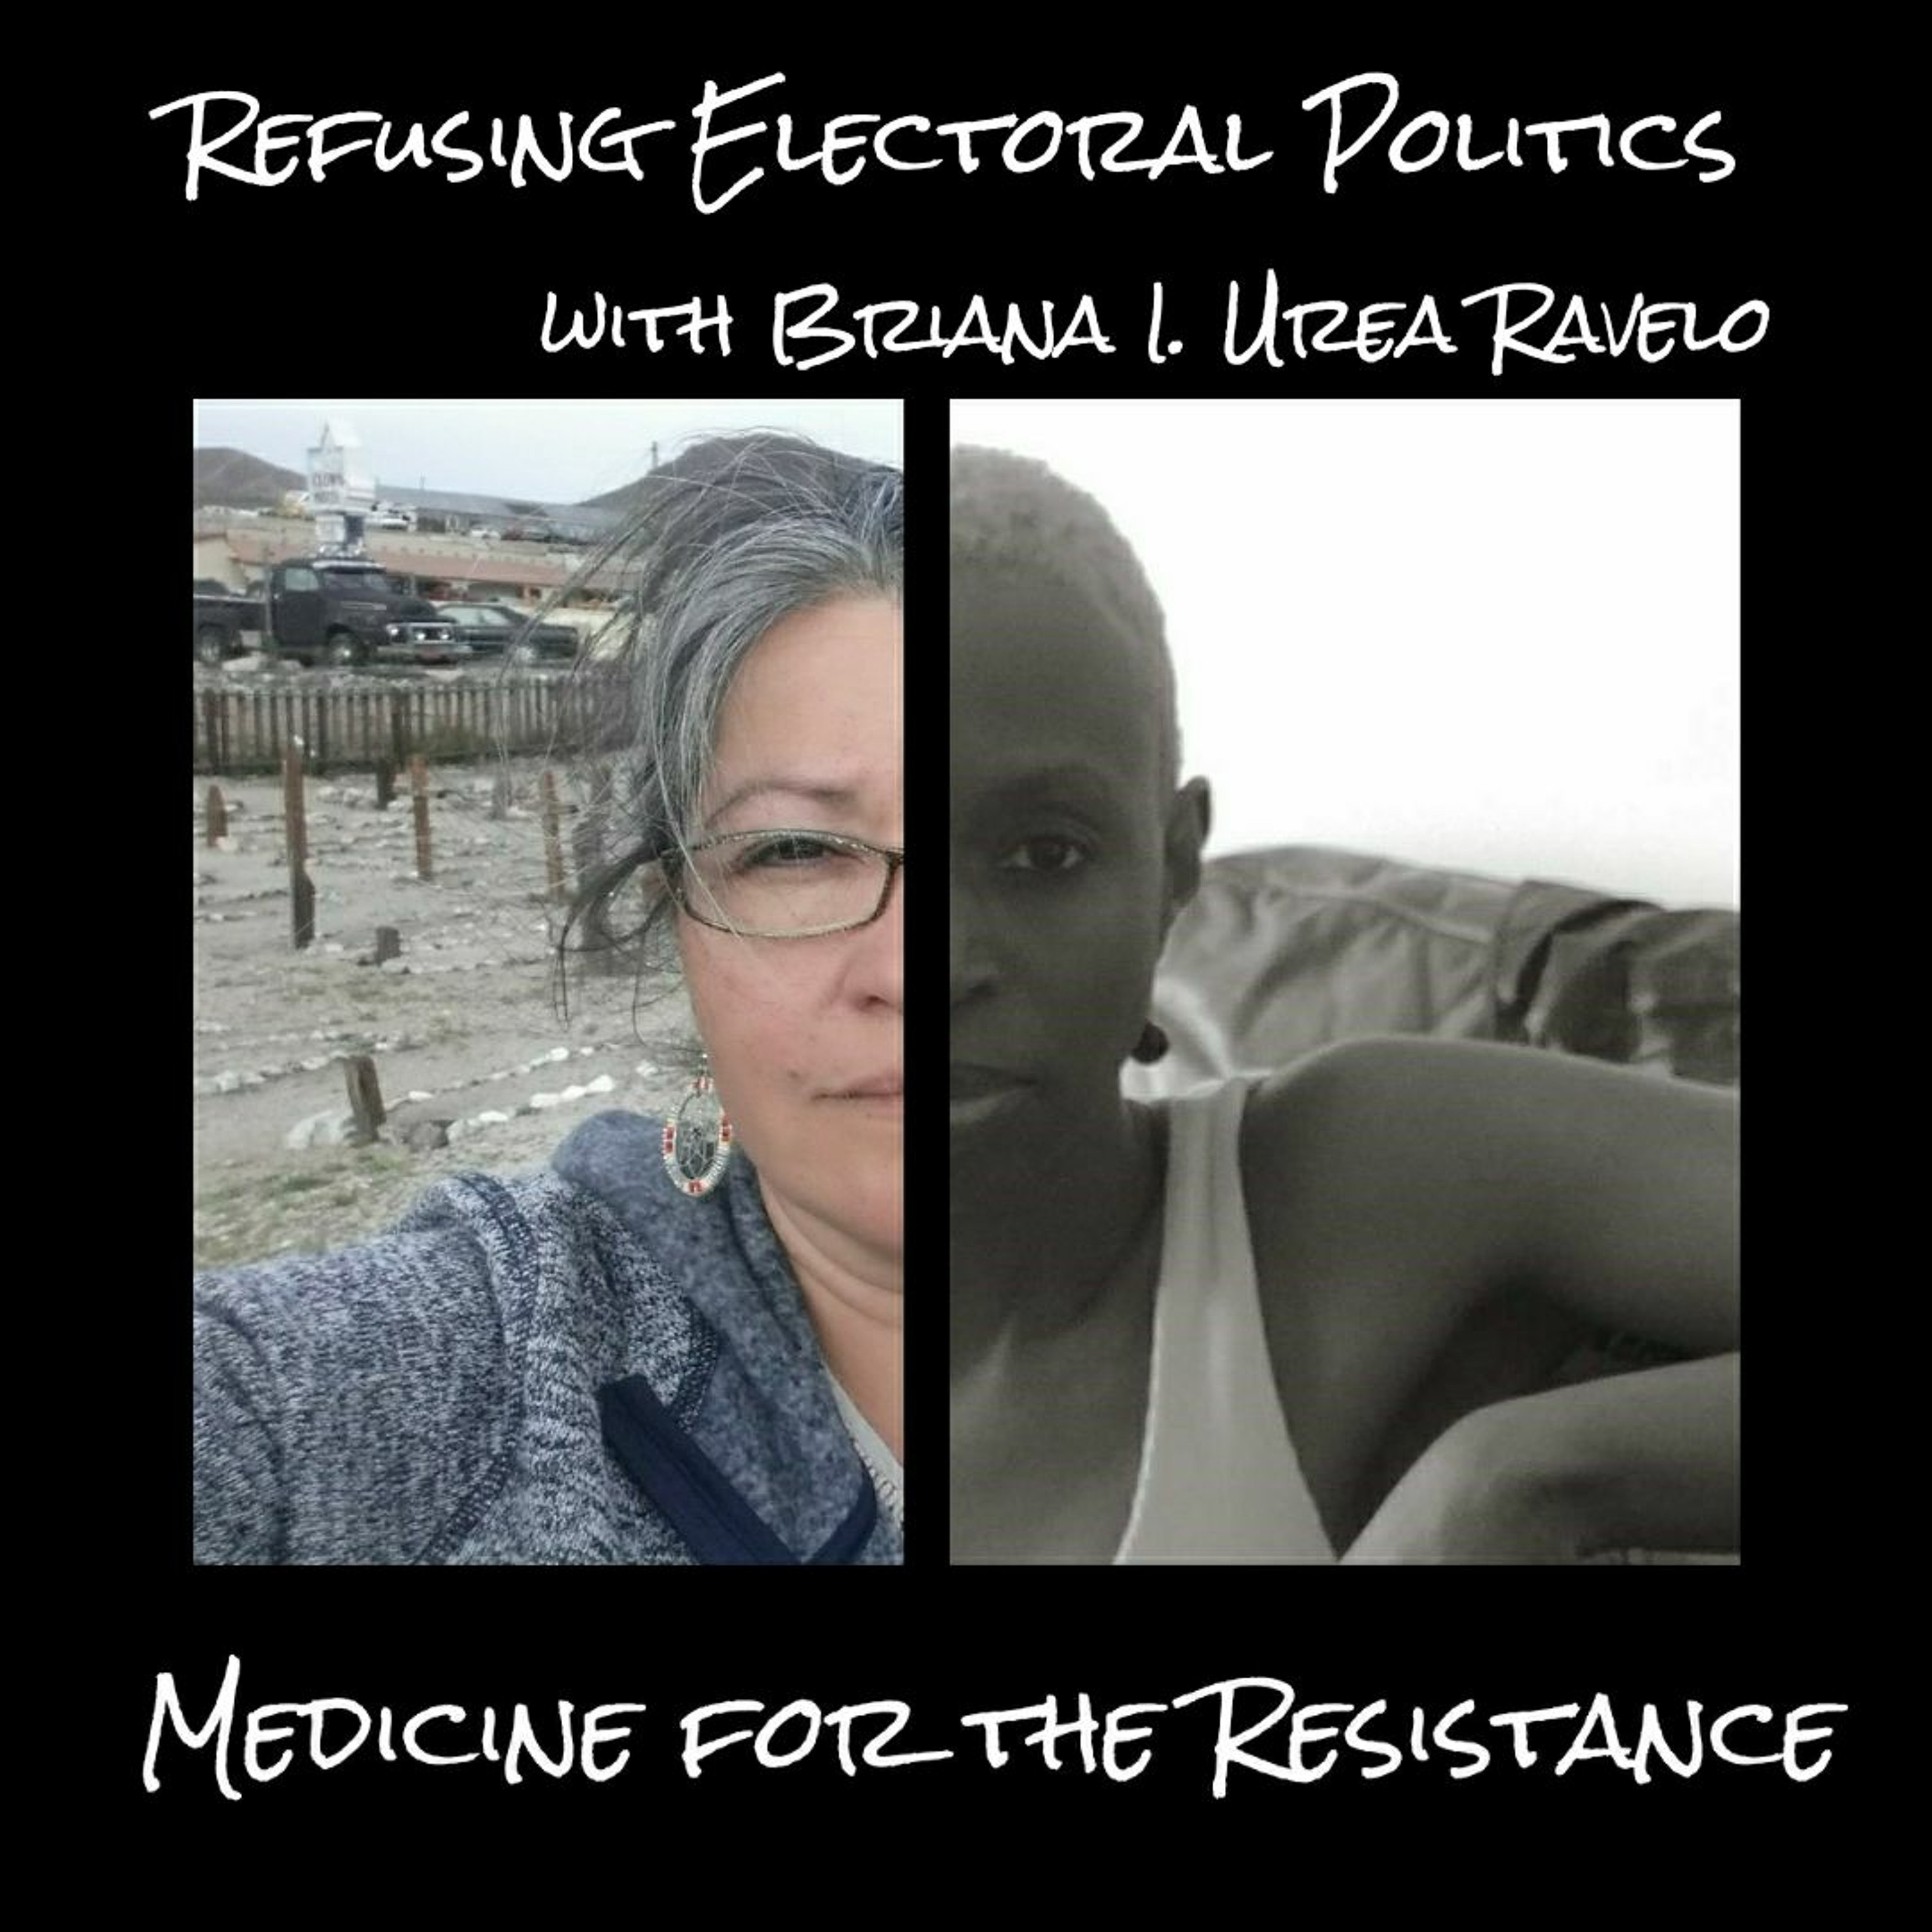 Refusing Electoral Politics with Briana l. Ureña Ravelo